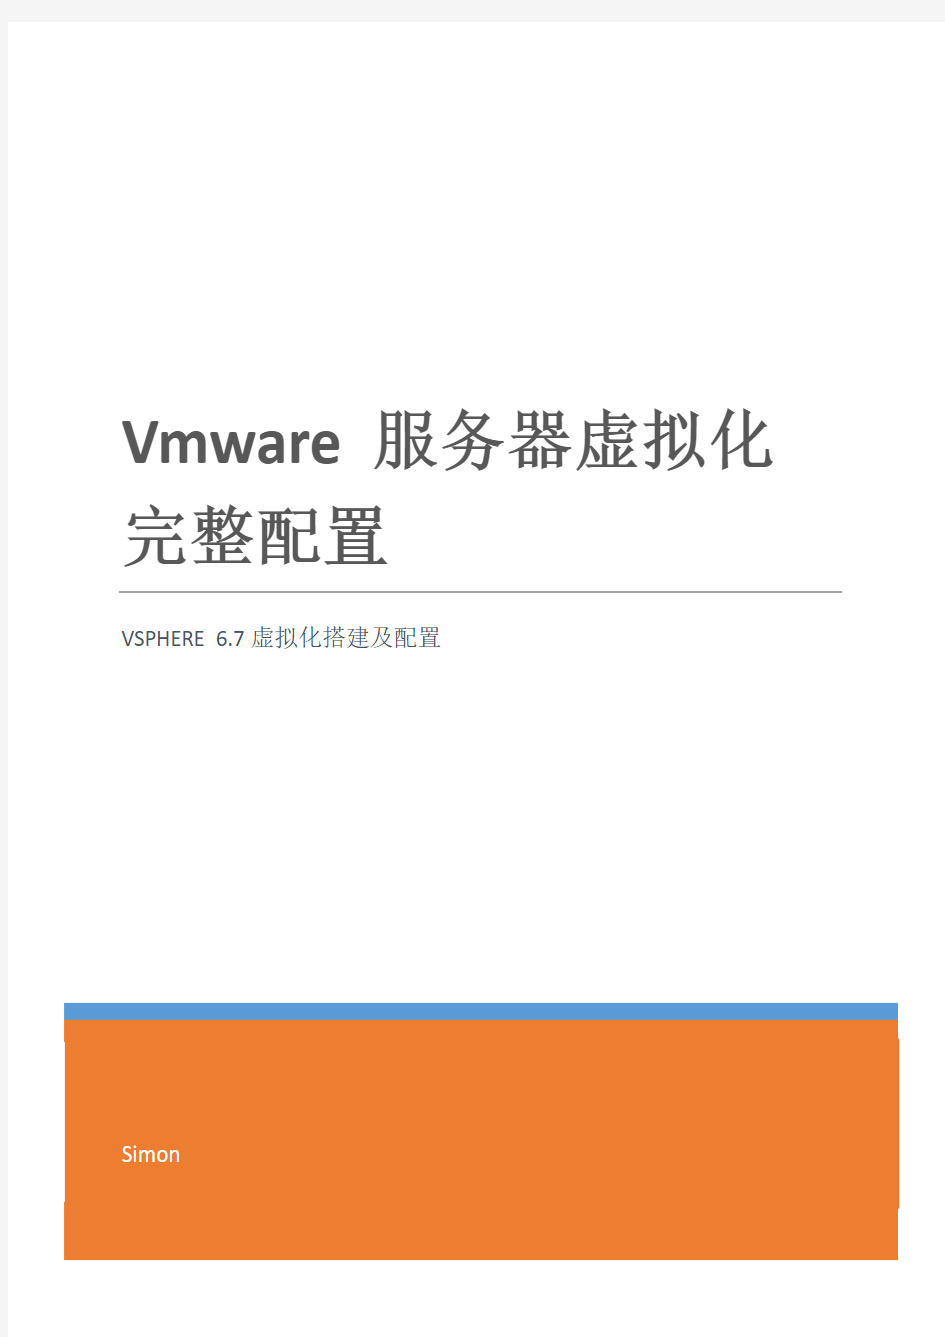 vmware vsphere 6.7虚拟化完整祥细配置手册